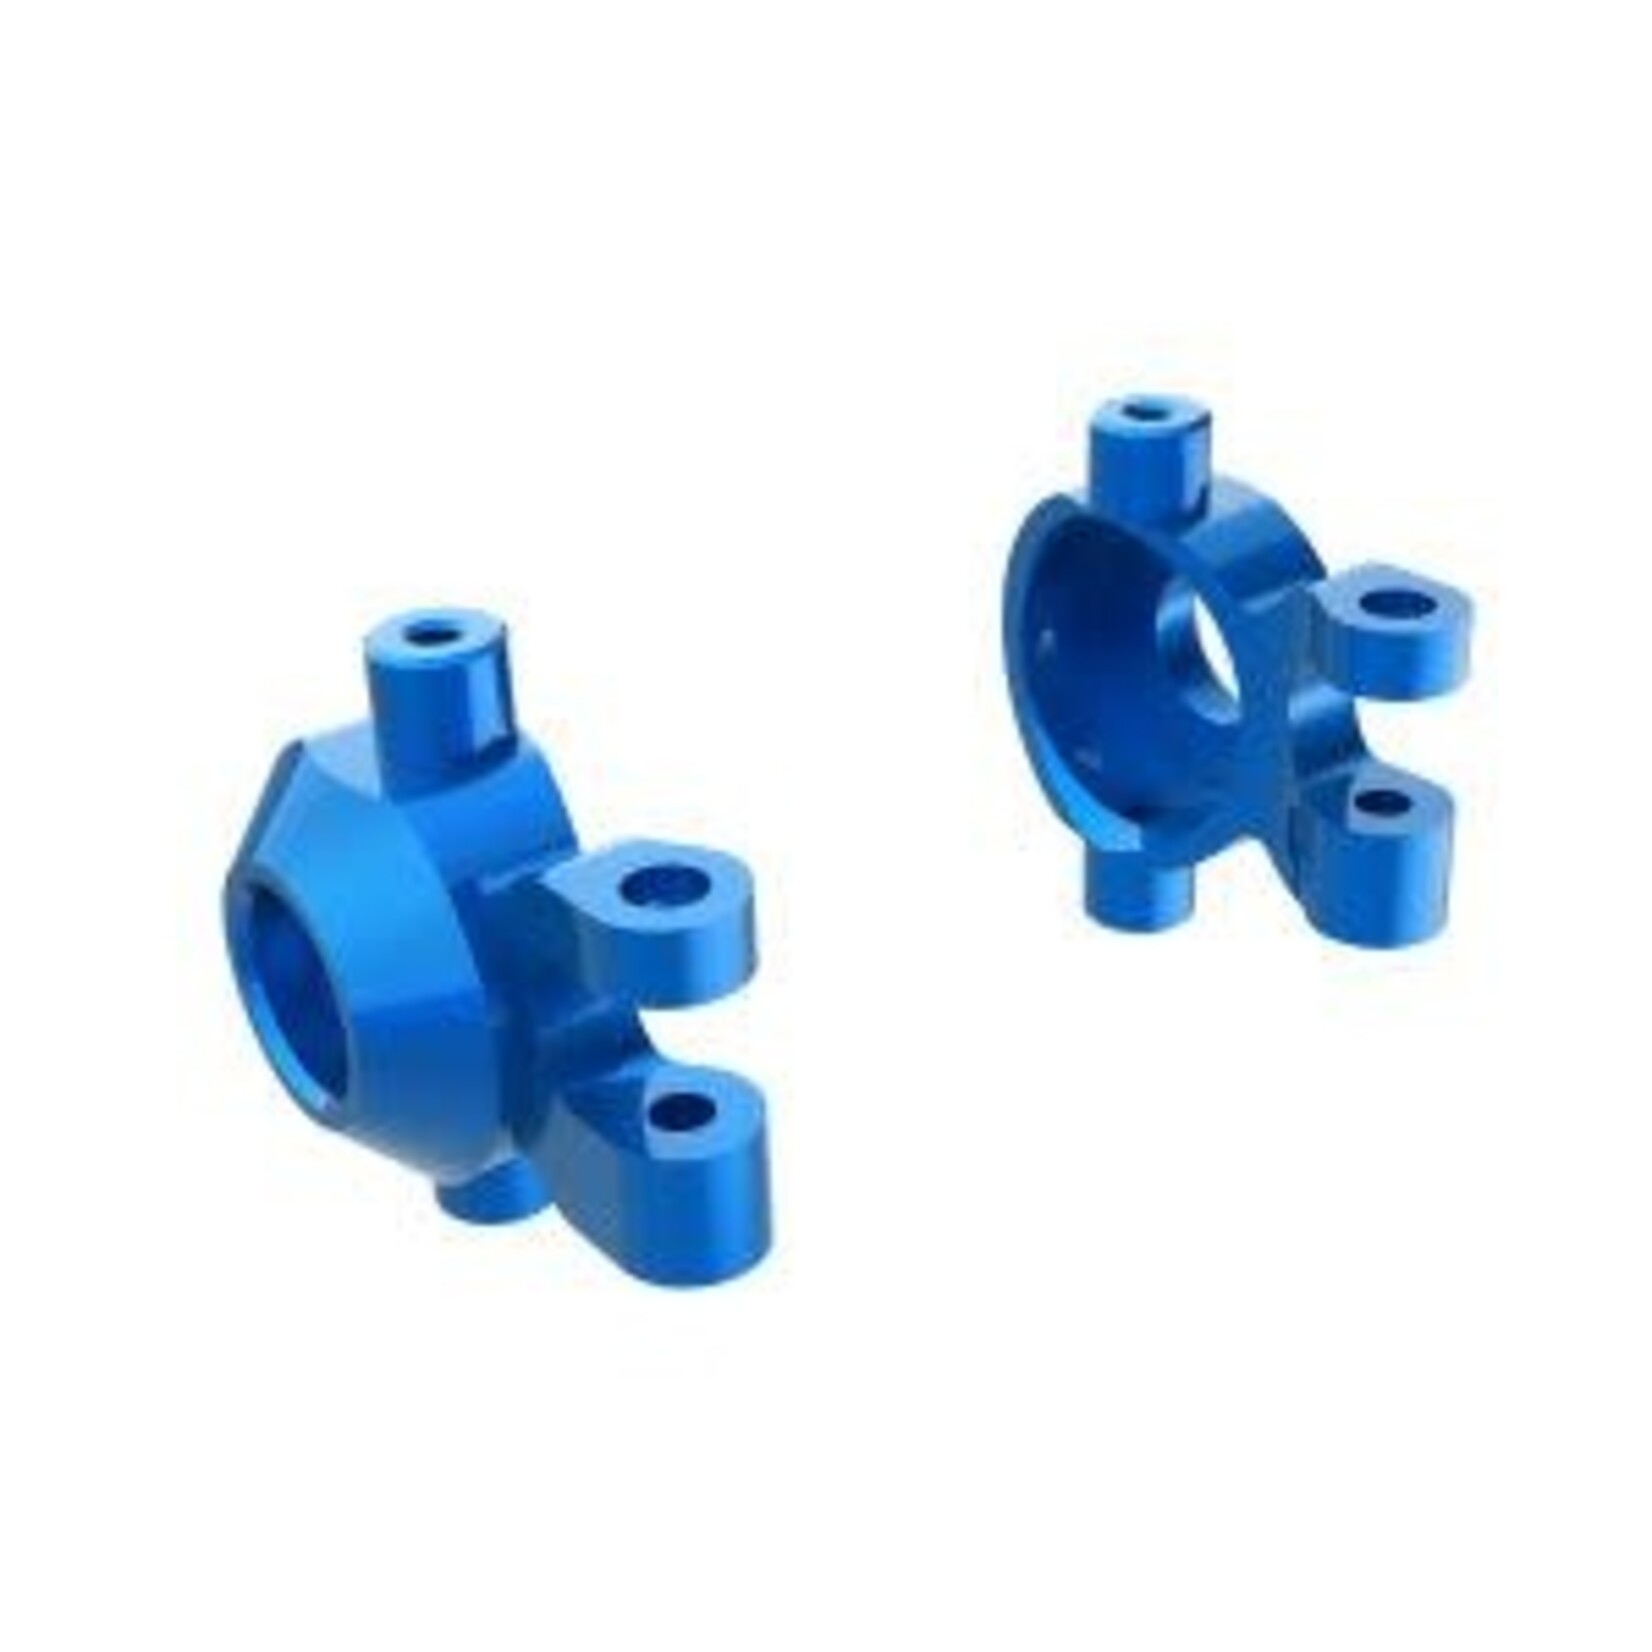 Traxxas 9737-BLUE Steering blocks, 6061-T6 aluminum